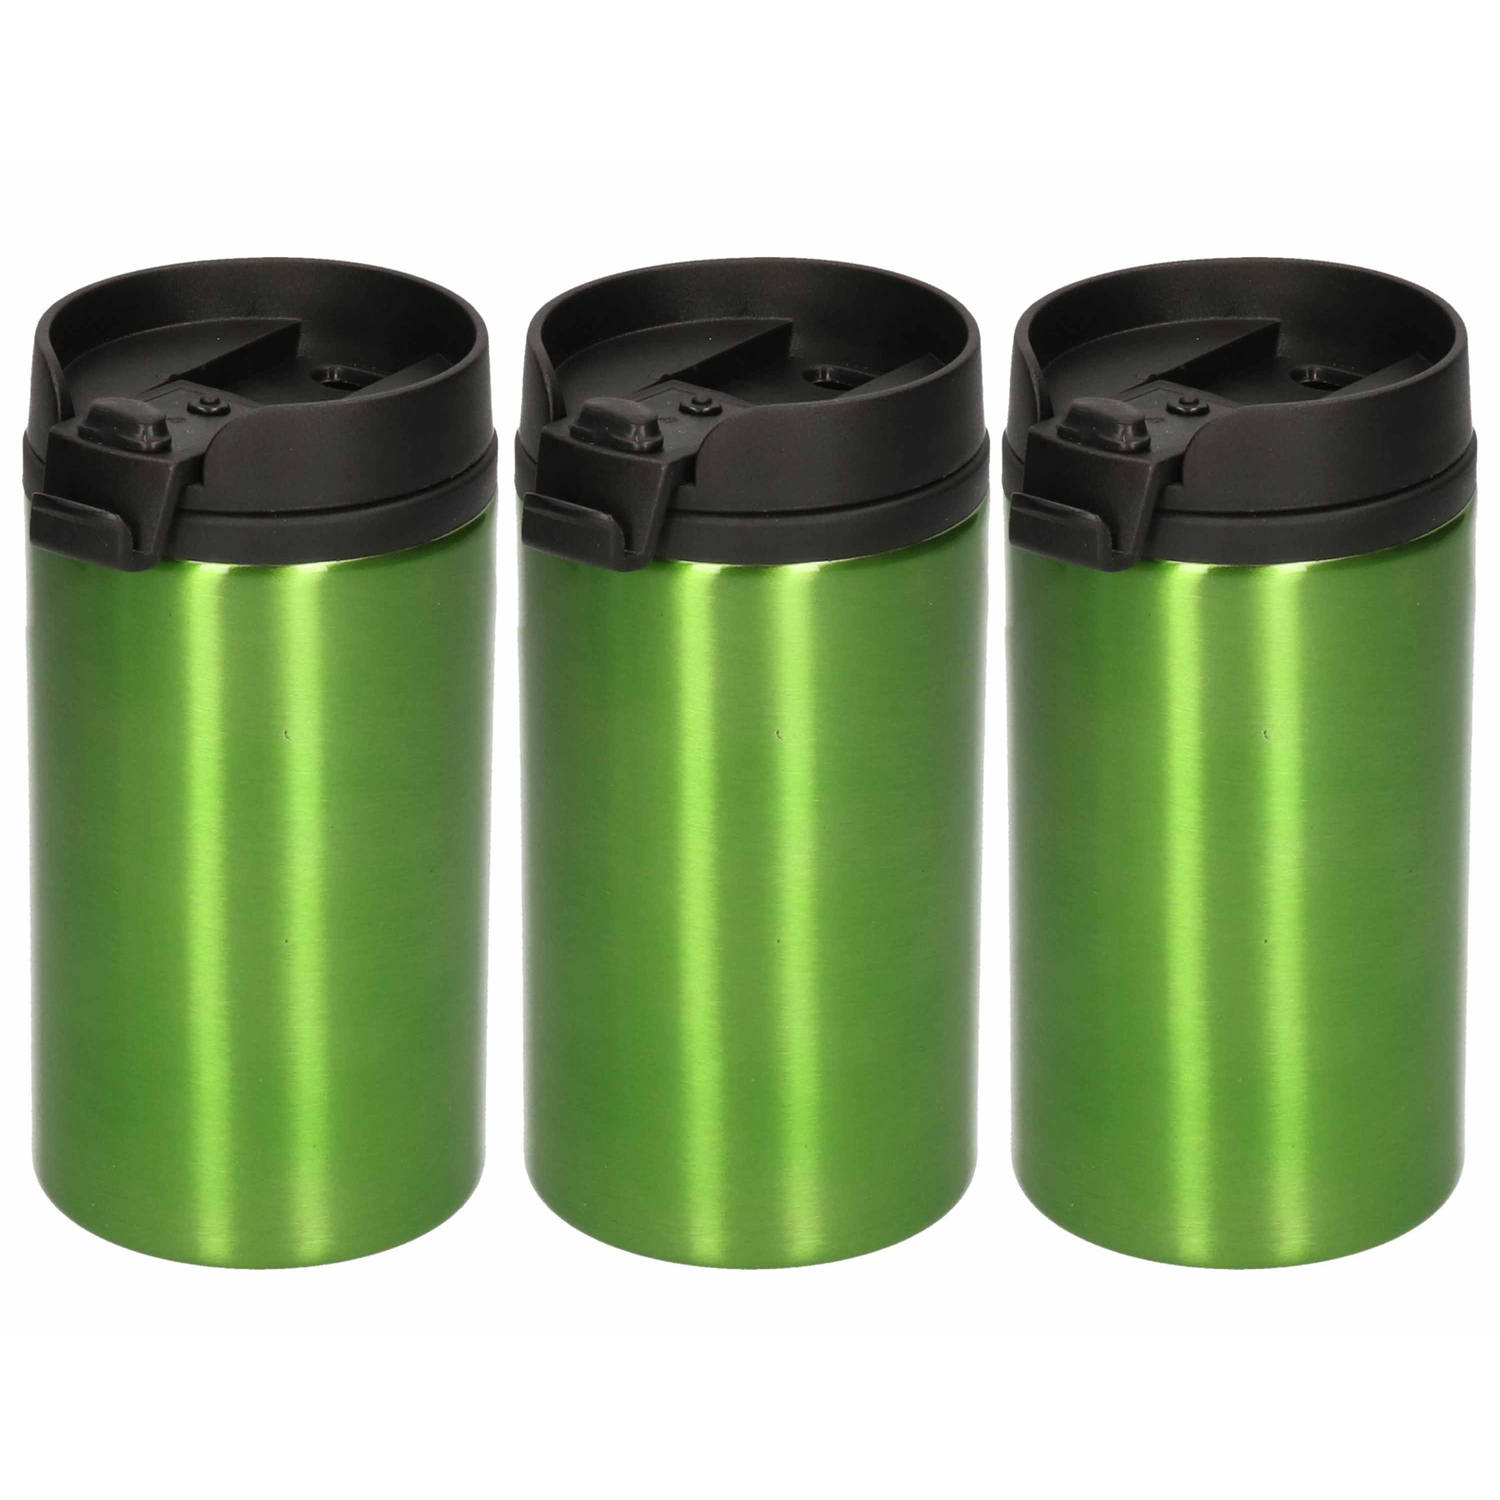 5x Isoleerbekers RVS metallic groen 320 ml - Thermosbeker